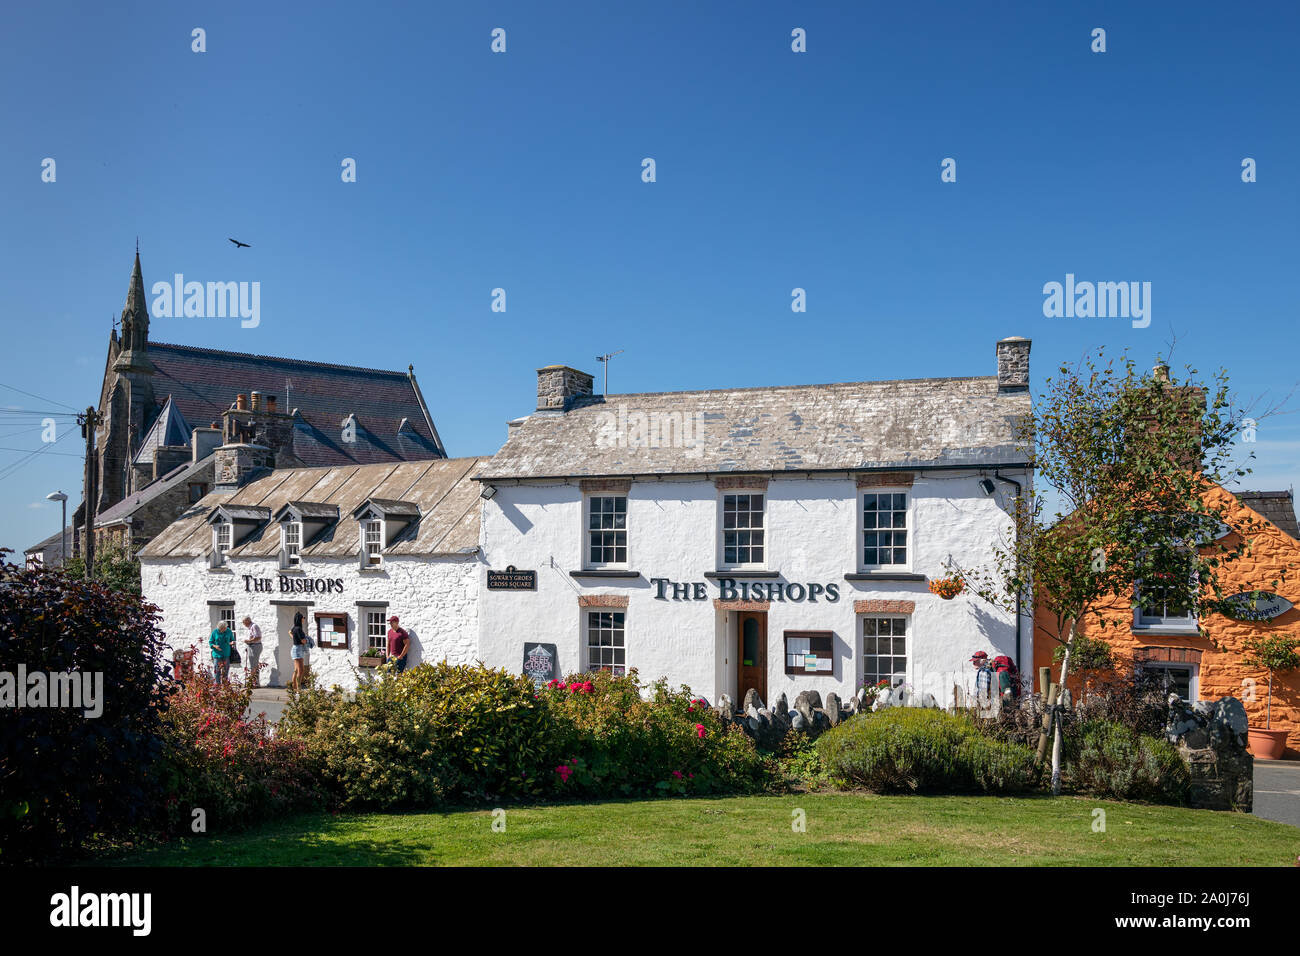 ST DAVID'S, PEMBROKESHIRE/UK - 13. SEPTEMBER: Blick auf die Gebäude in St. David's in Pembrokeshire am 13. September 2019. Nicht identifizierte Personen Stockfoto